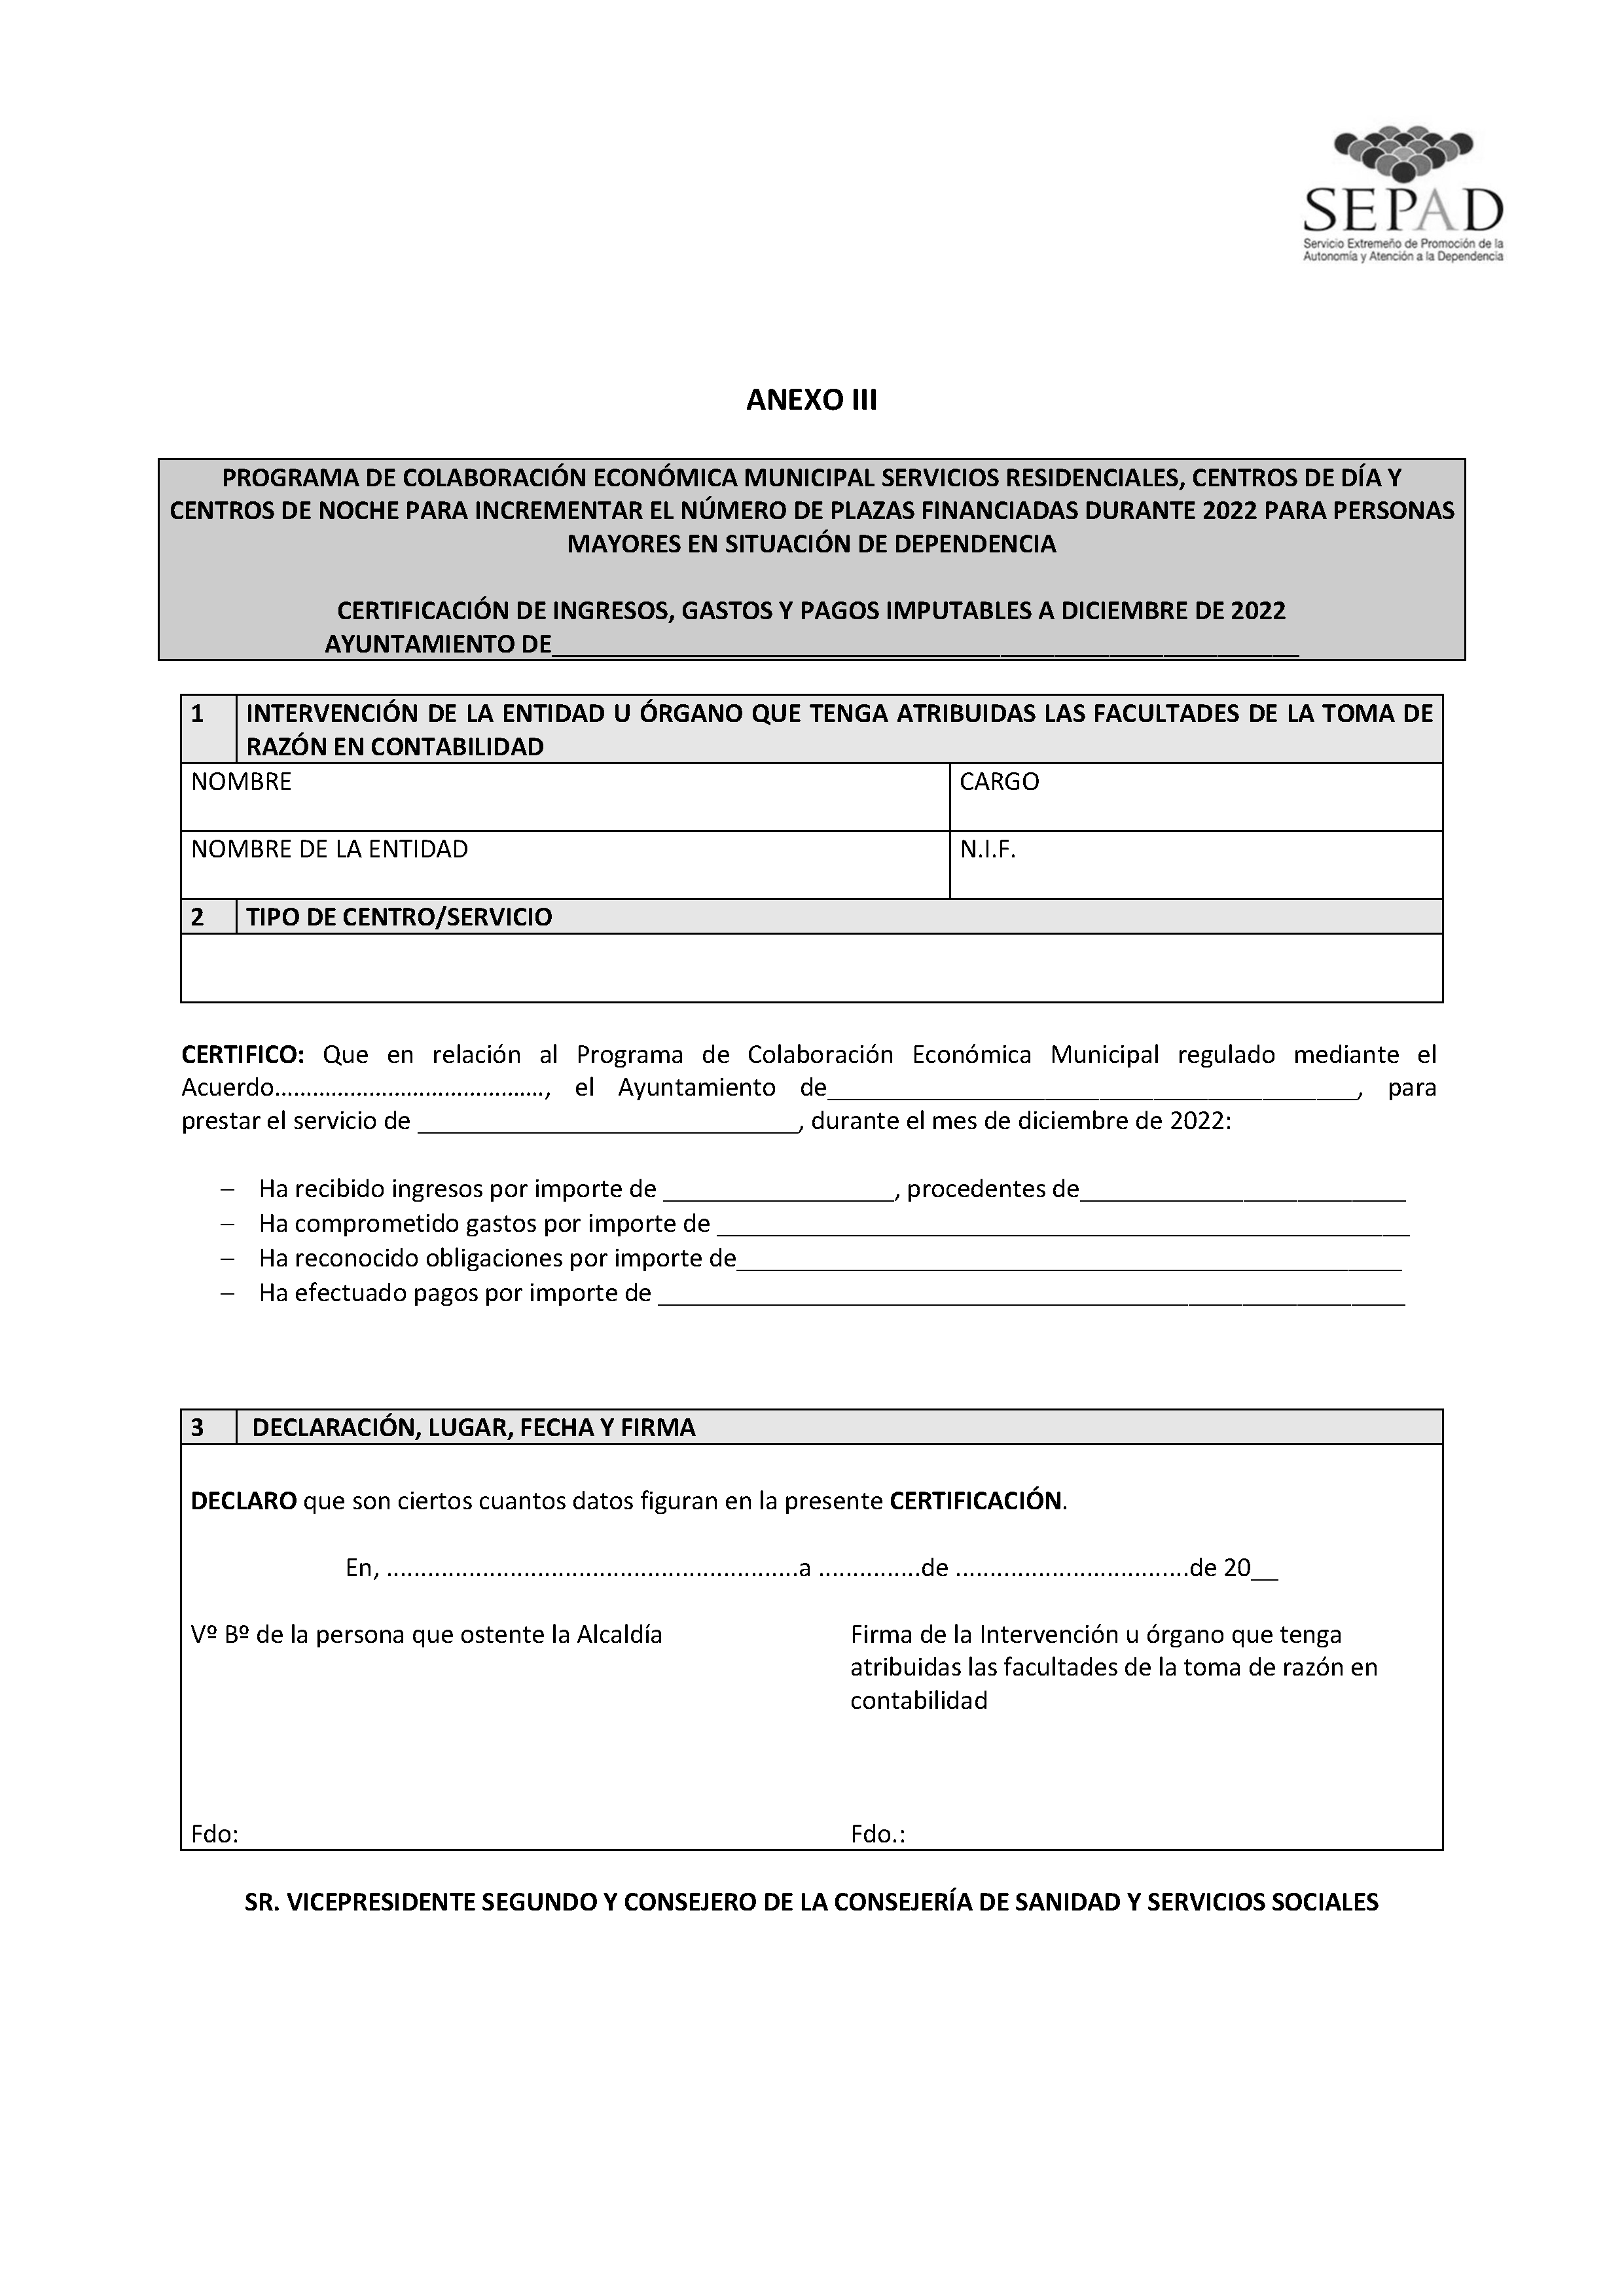 ANEXO I - PROGRAMA DE COLABORACION ECONOMICA MUNICIPAL Pag 10